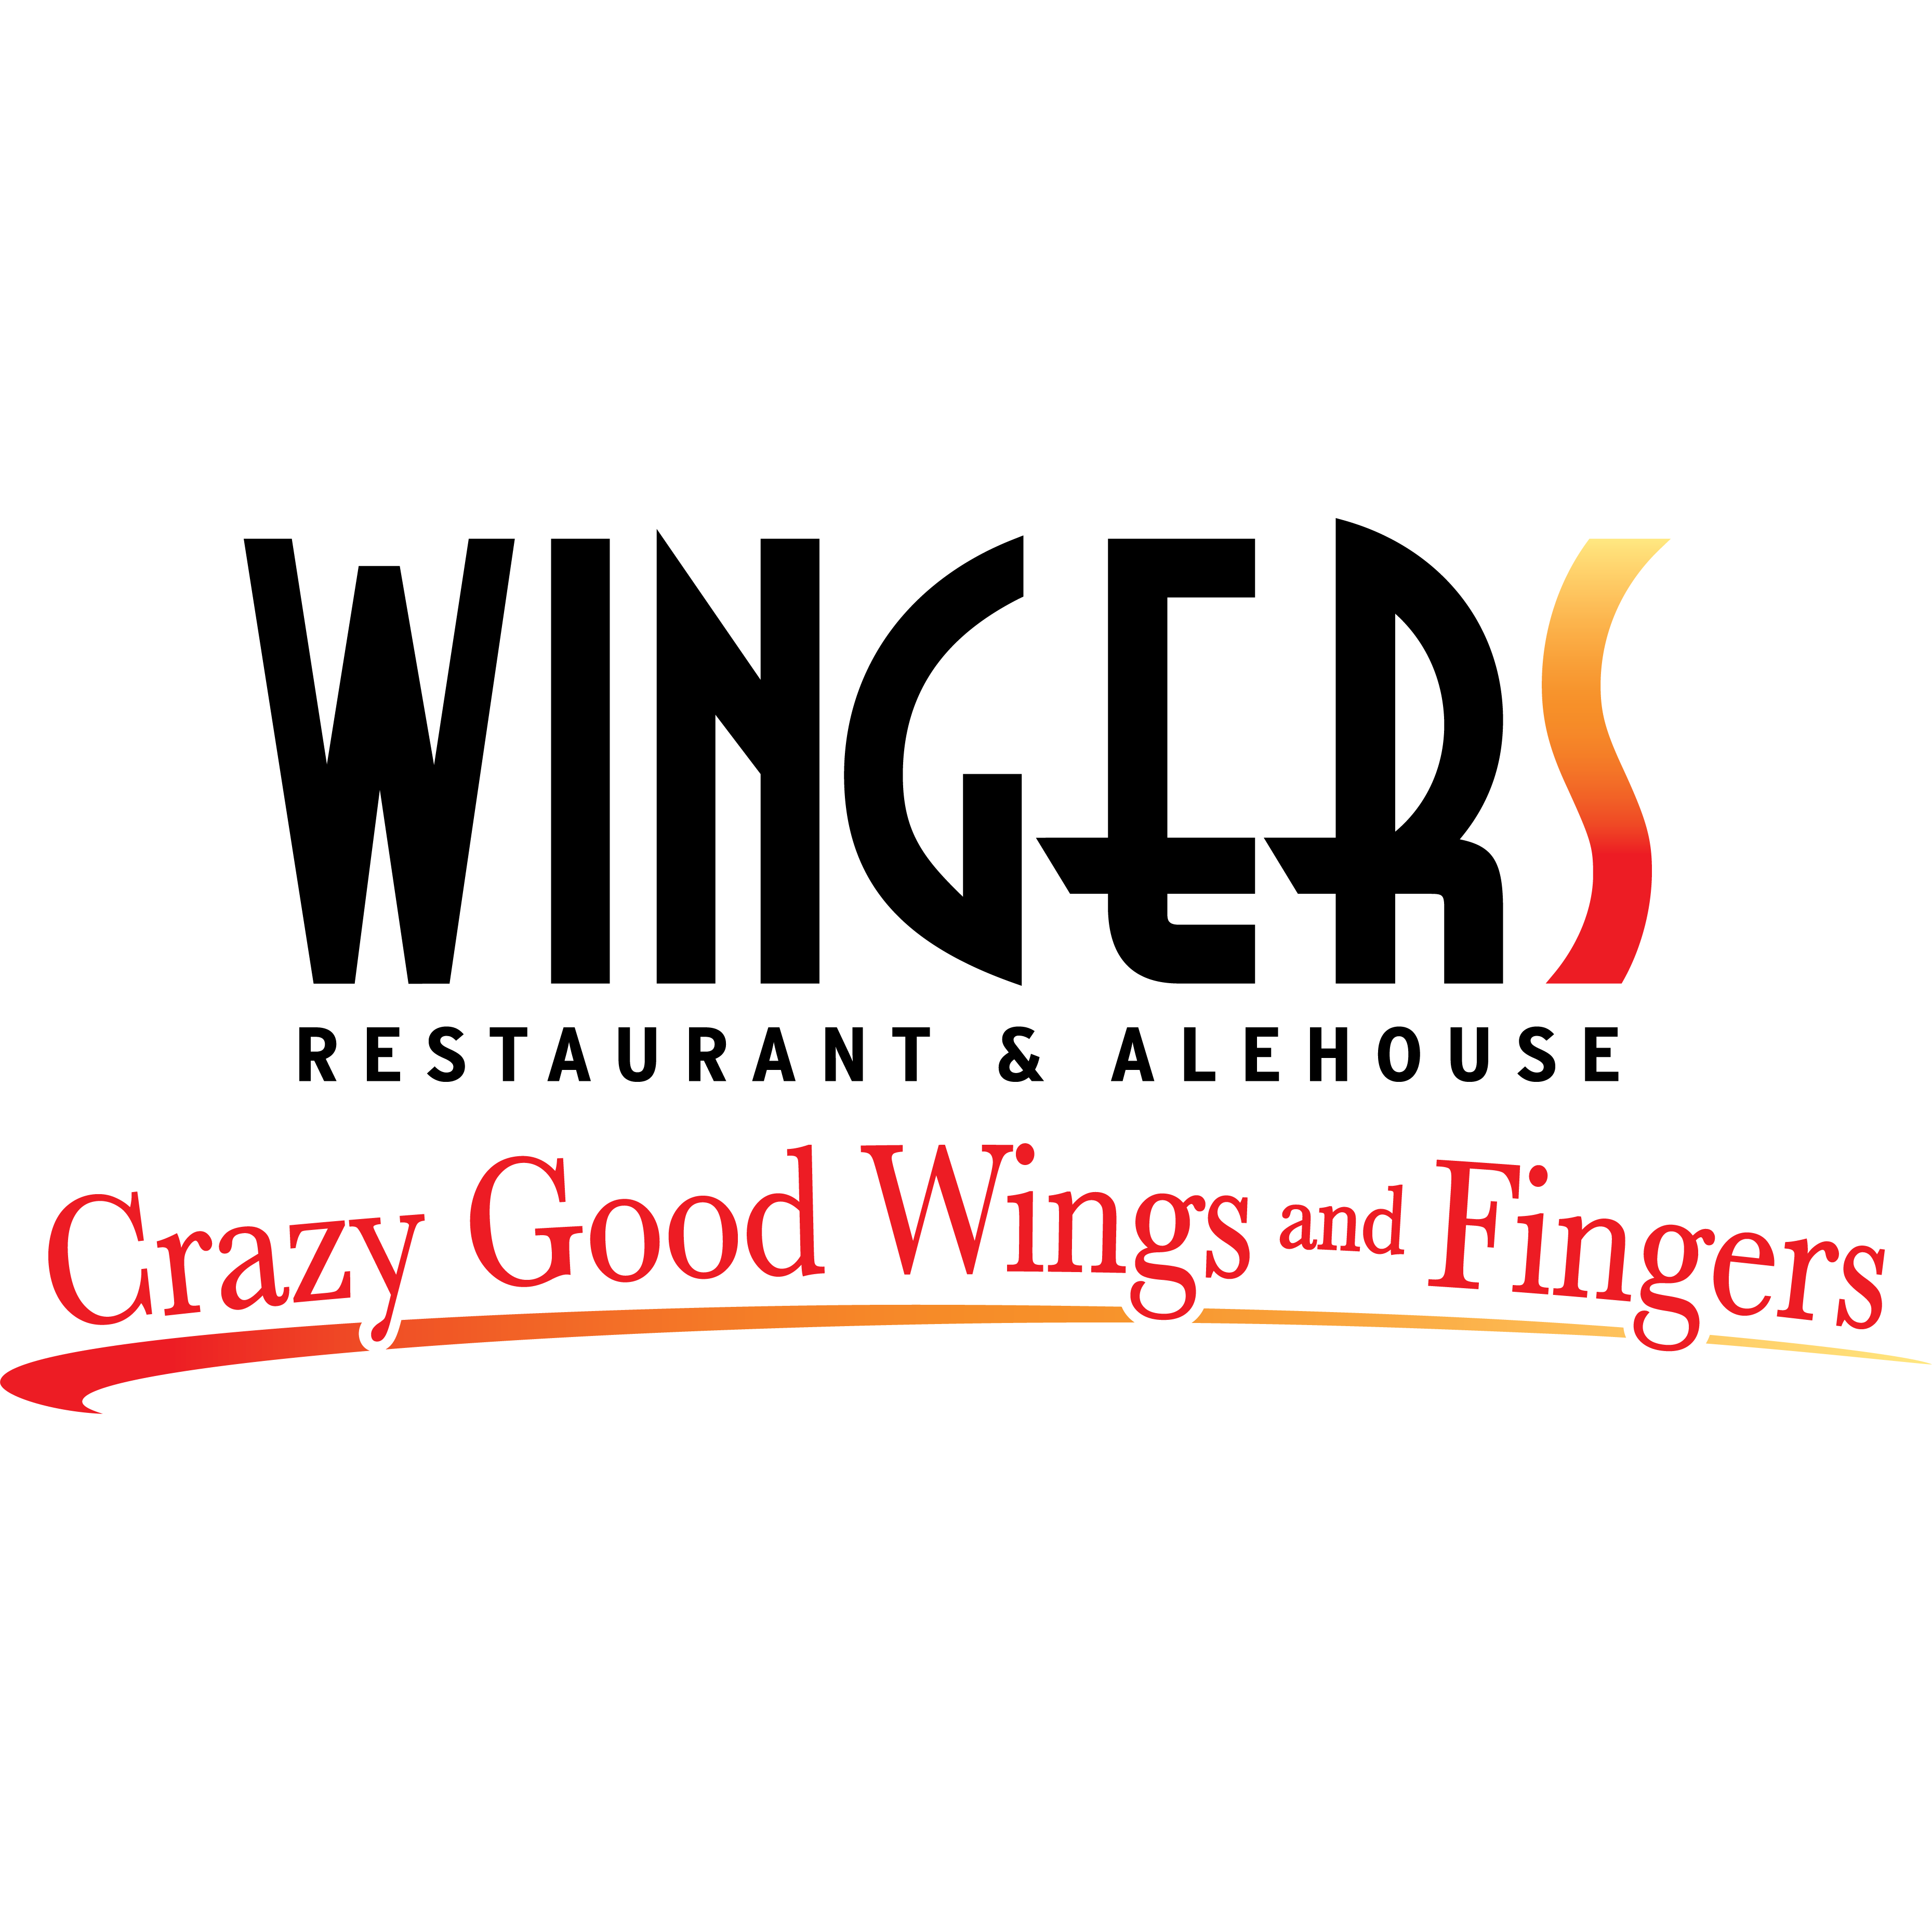 Wingers Restaurant & Alehouse - Bountiful, UT 84010 - (801)683-8343 | ShowMeLocal.com